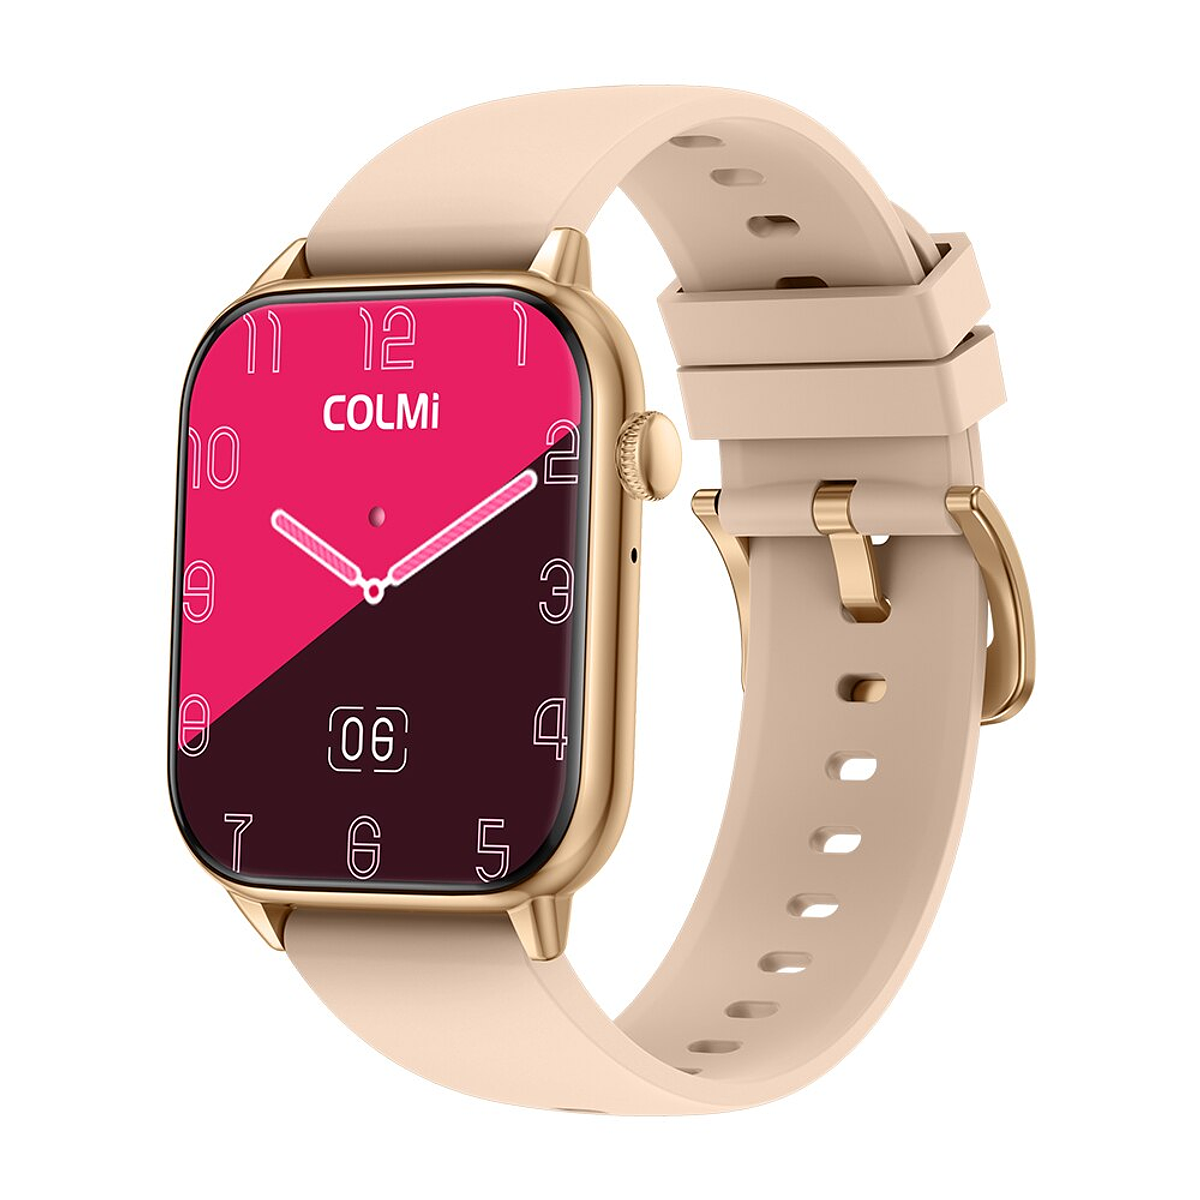 Smartwatch Colmi C60 - Relógio Inteligente